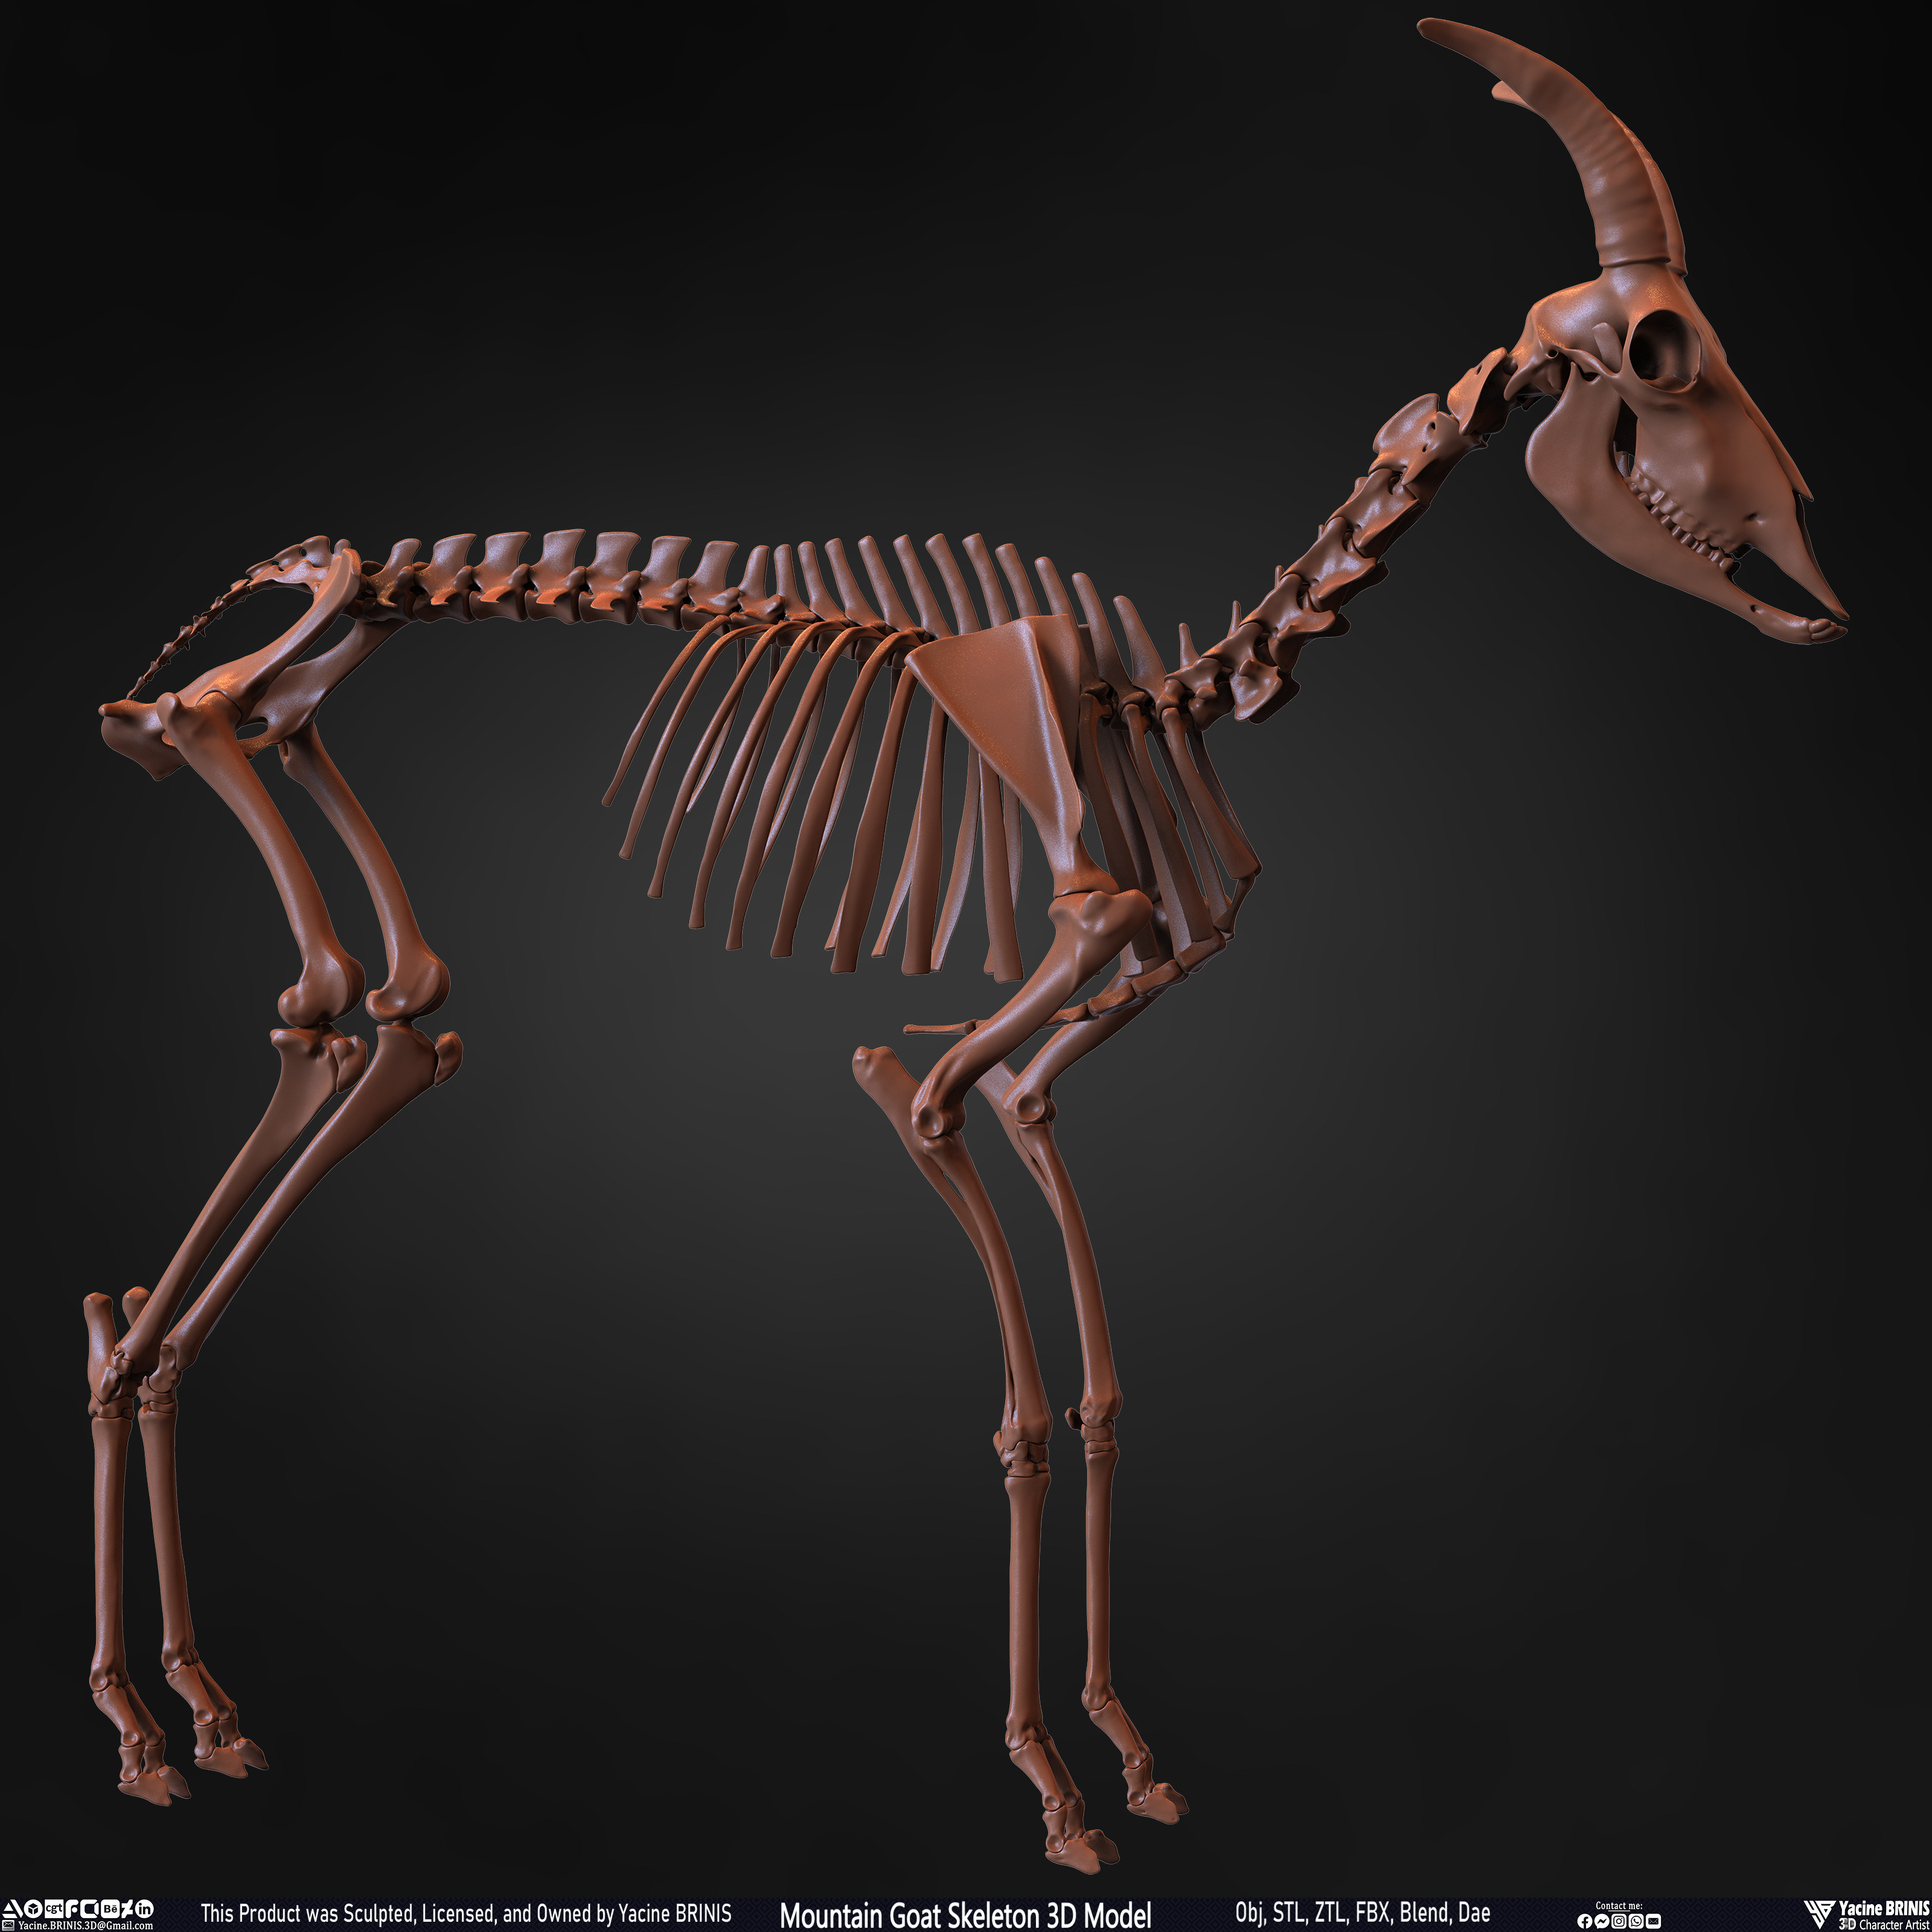 Mountain Goat Skeleton 3D Model Sculpted by Yacine BRINIS Set 024